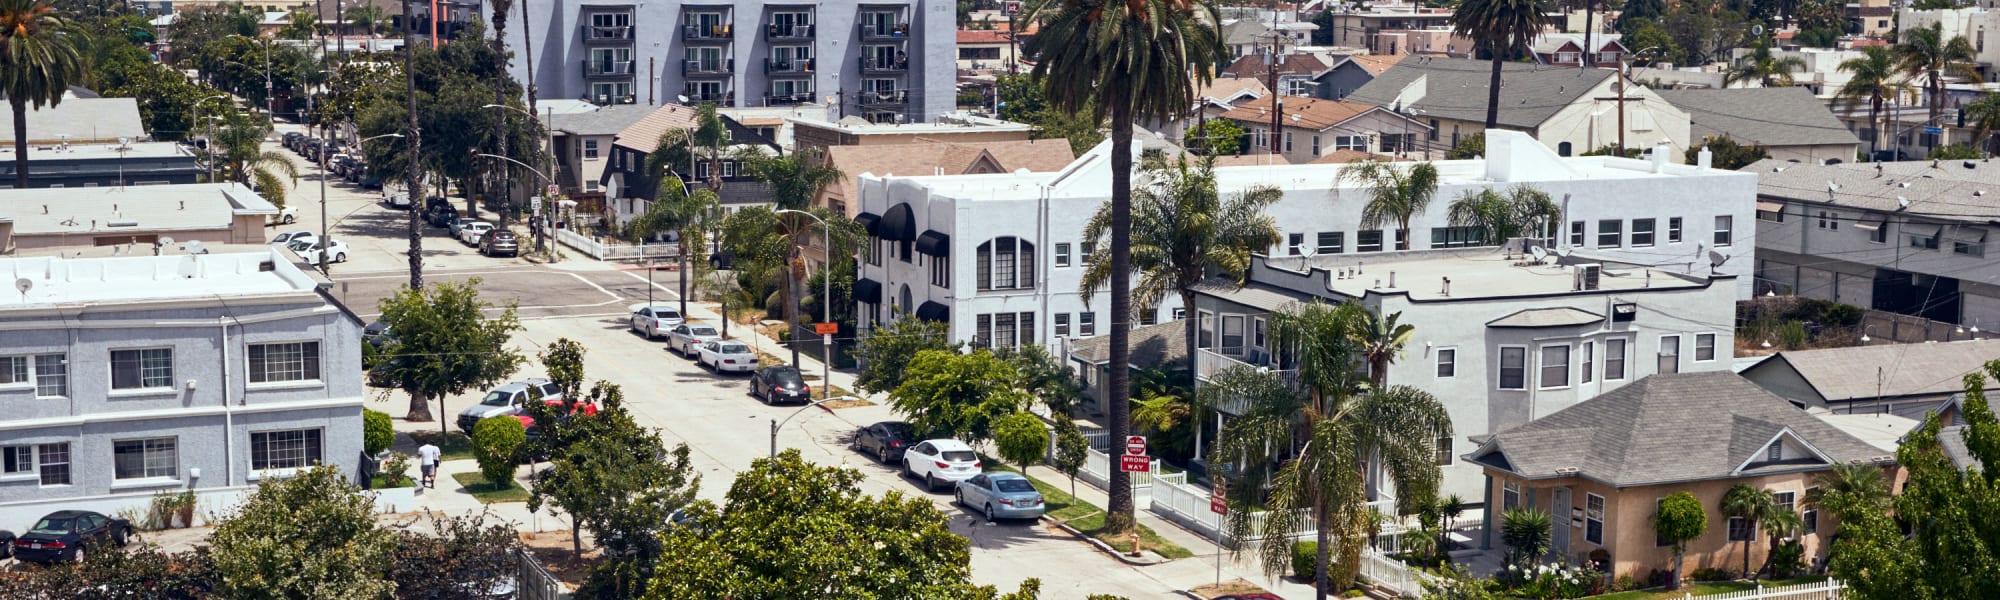 Neighborhood near The Linden in Long Beach, California